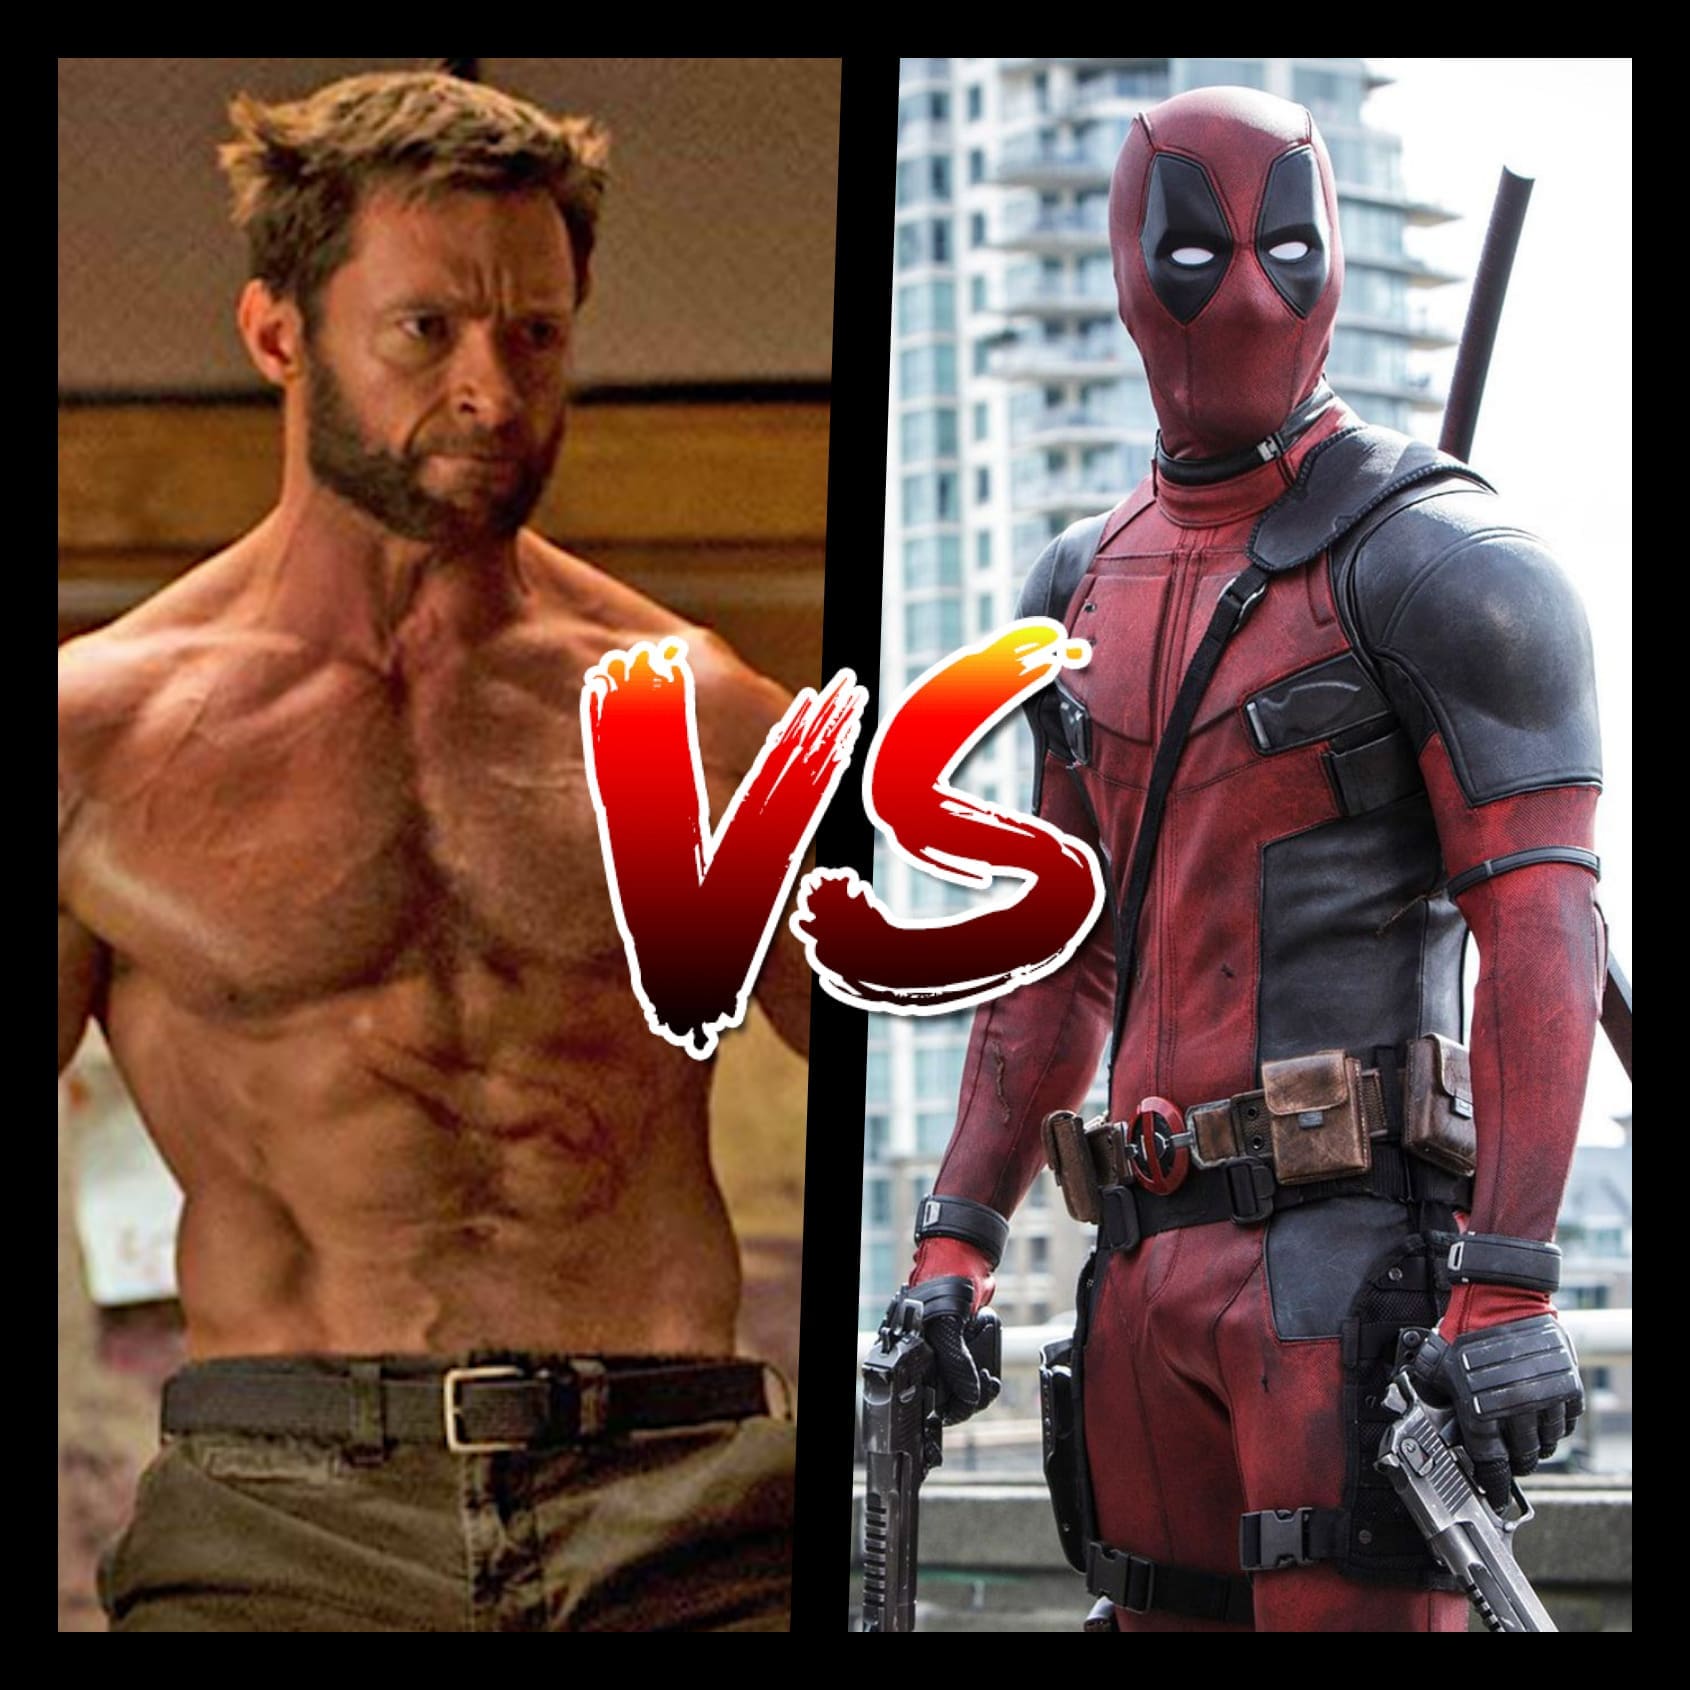 Ryan Reynolds vs Hugh Jackman: Which superhero does watches better?